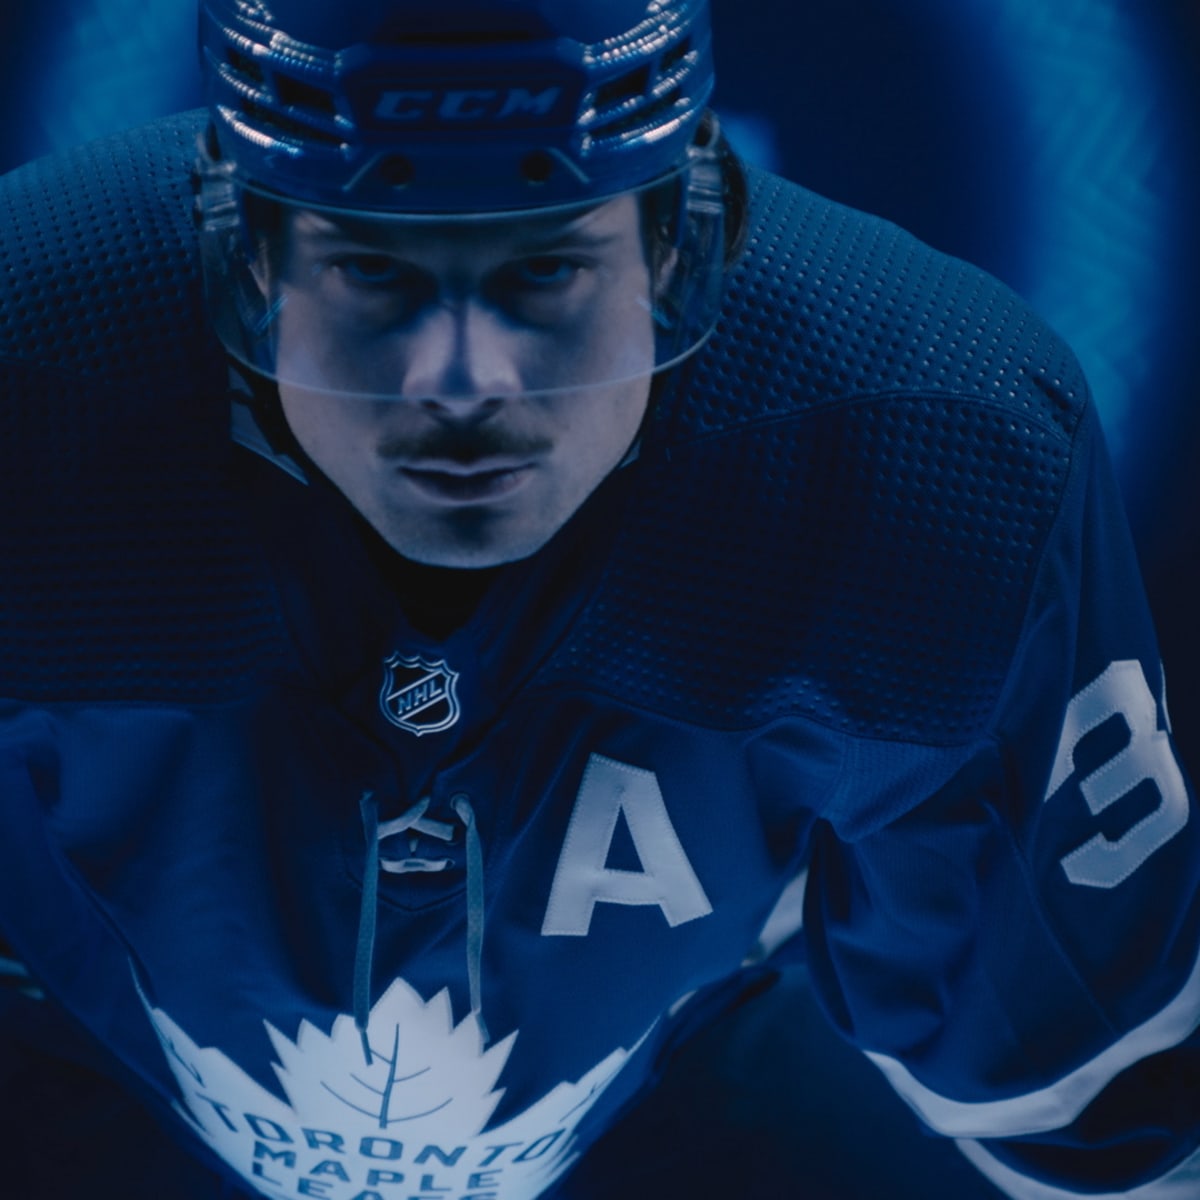 NHL Women's Toronto Maple Leafs Auston Matthews #34 Special